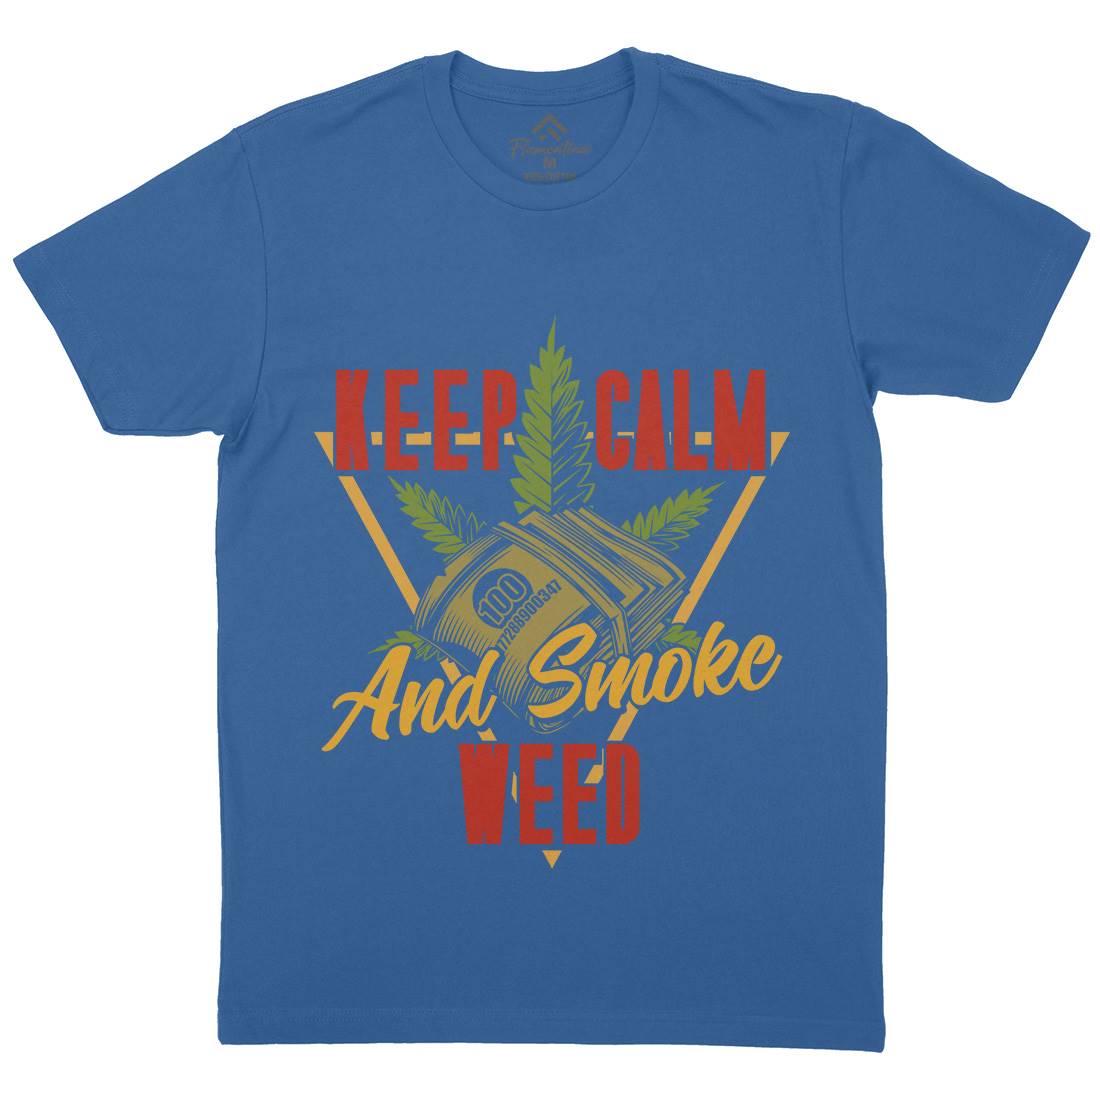 Keep Calm Mens Crew Neck T-Shirt Drugs B808